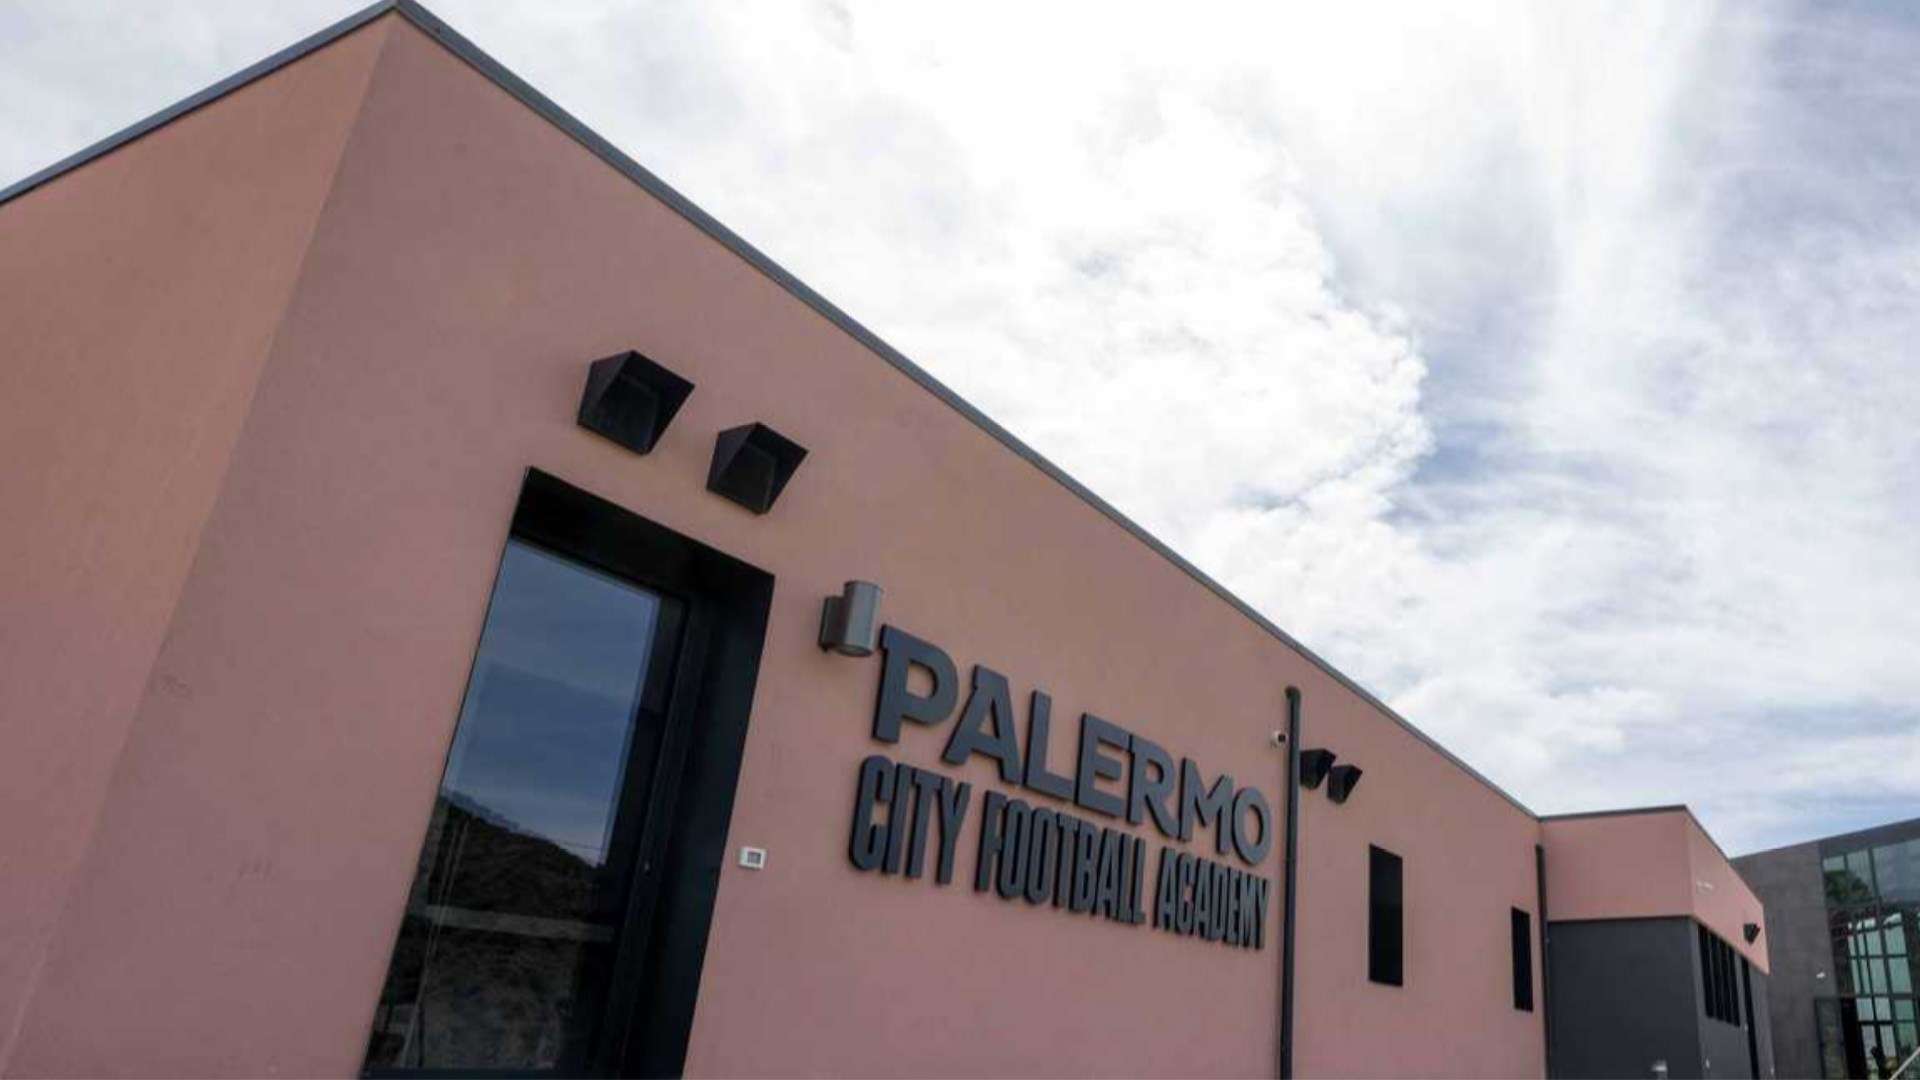 Palermo training ground